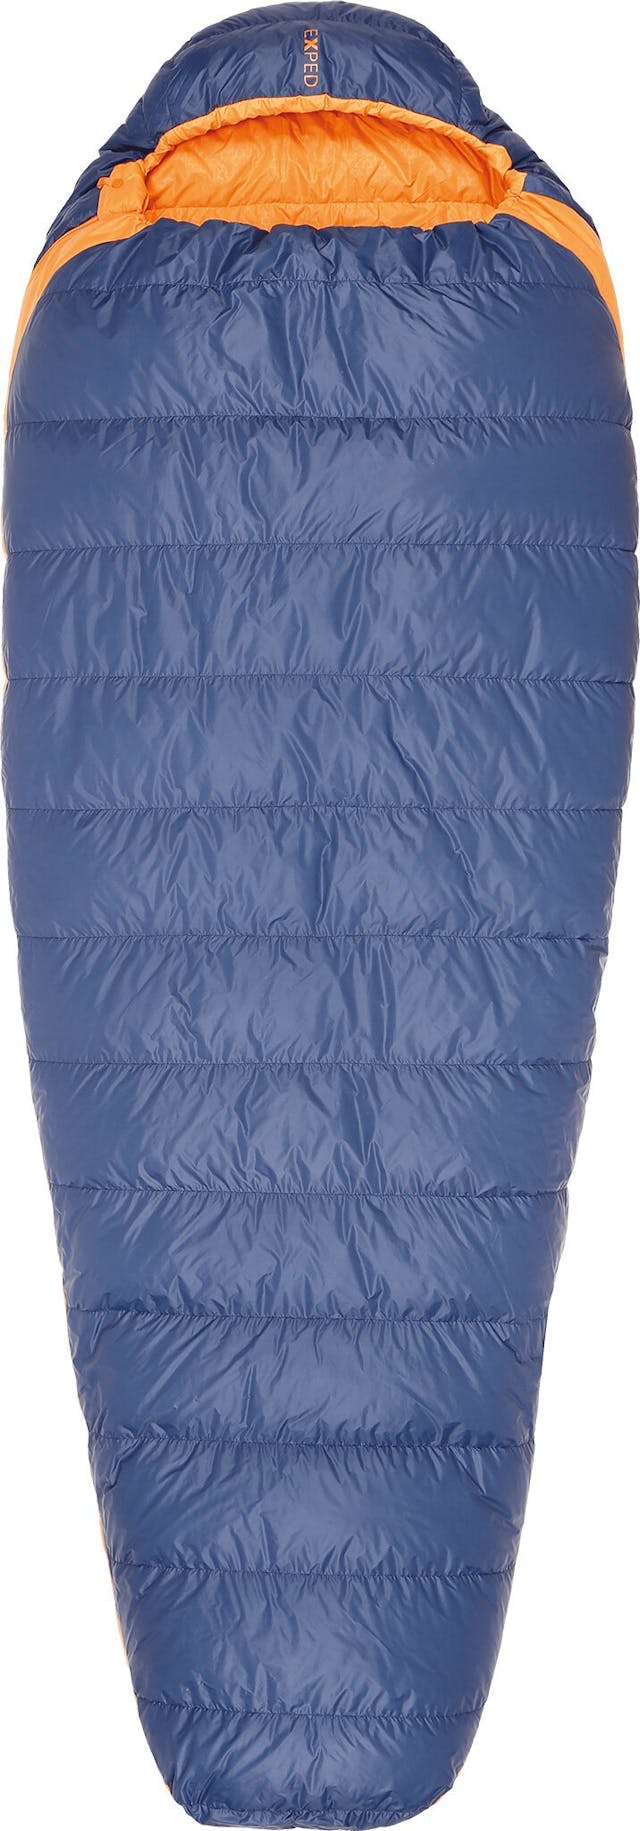 Product image for Comfort -5° Sleeping Bag - Unisex